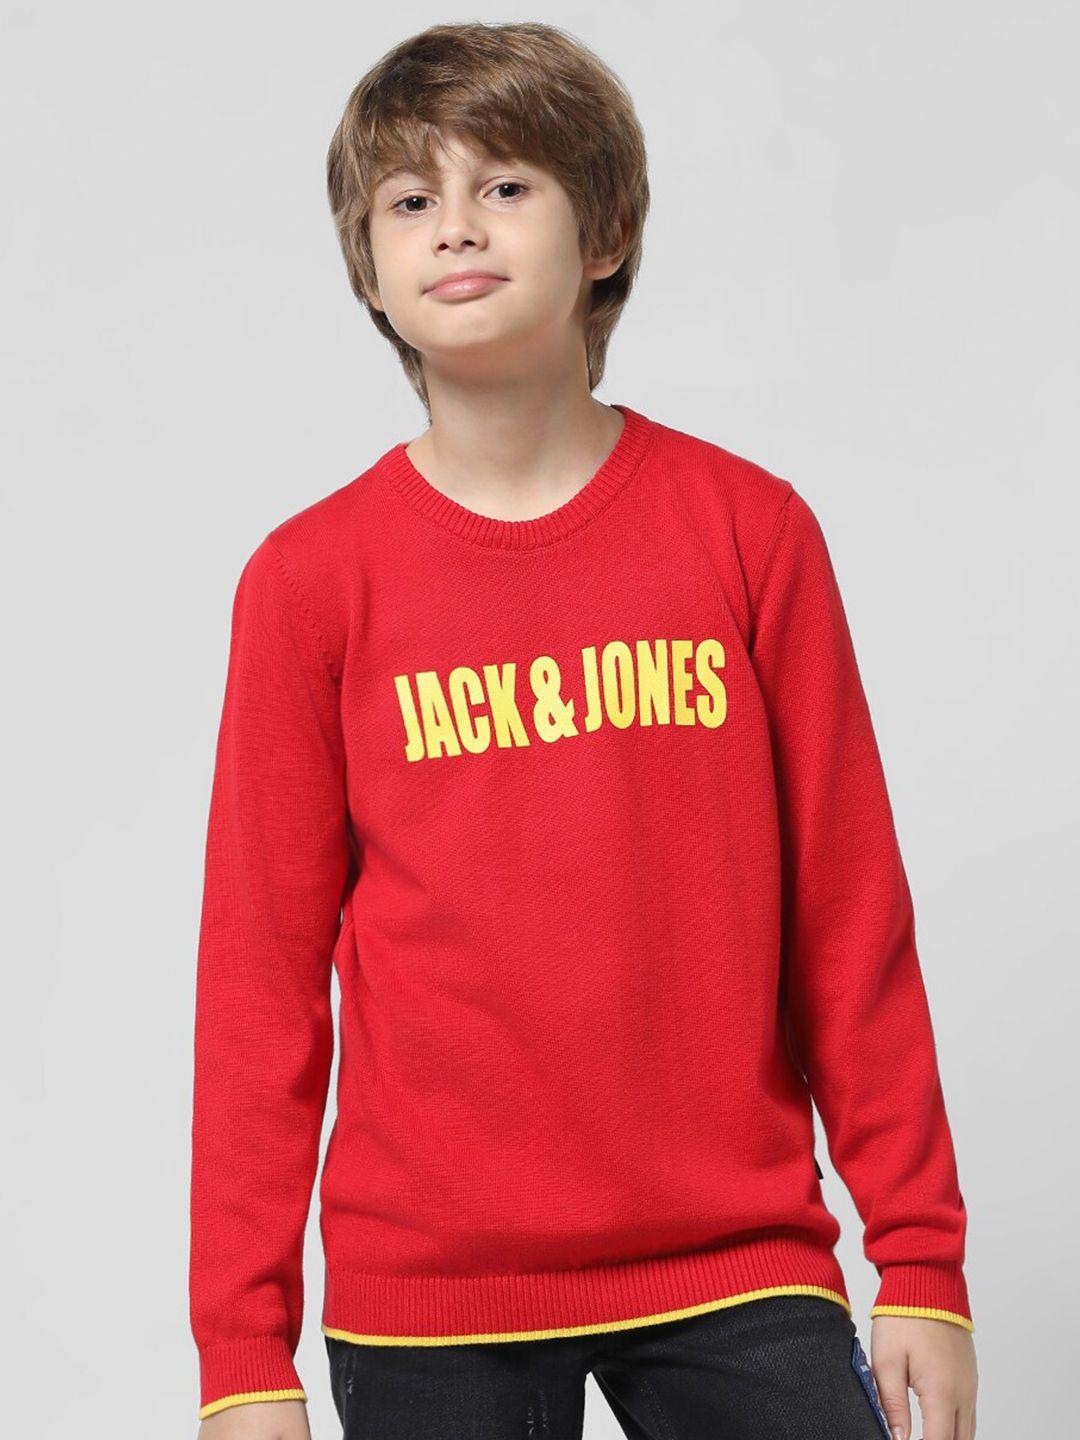 jack & jones junior boys typography printed pure cotton pullover